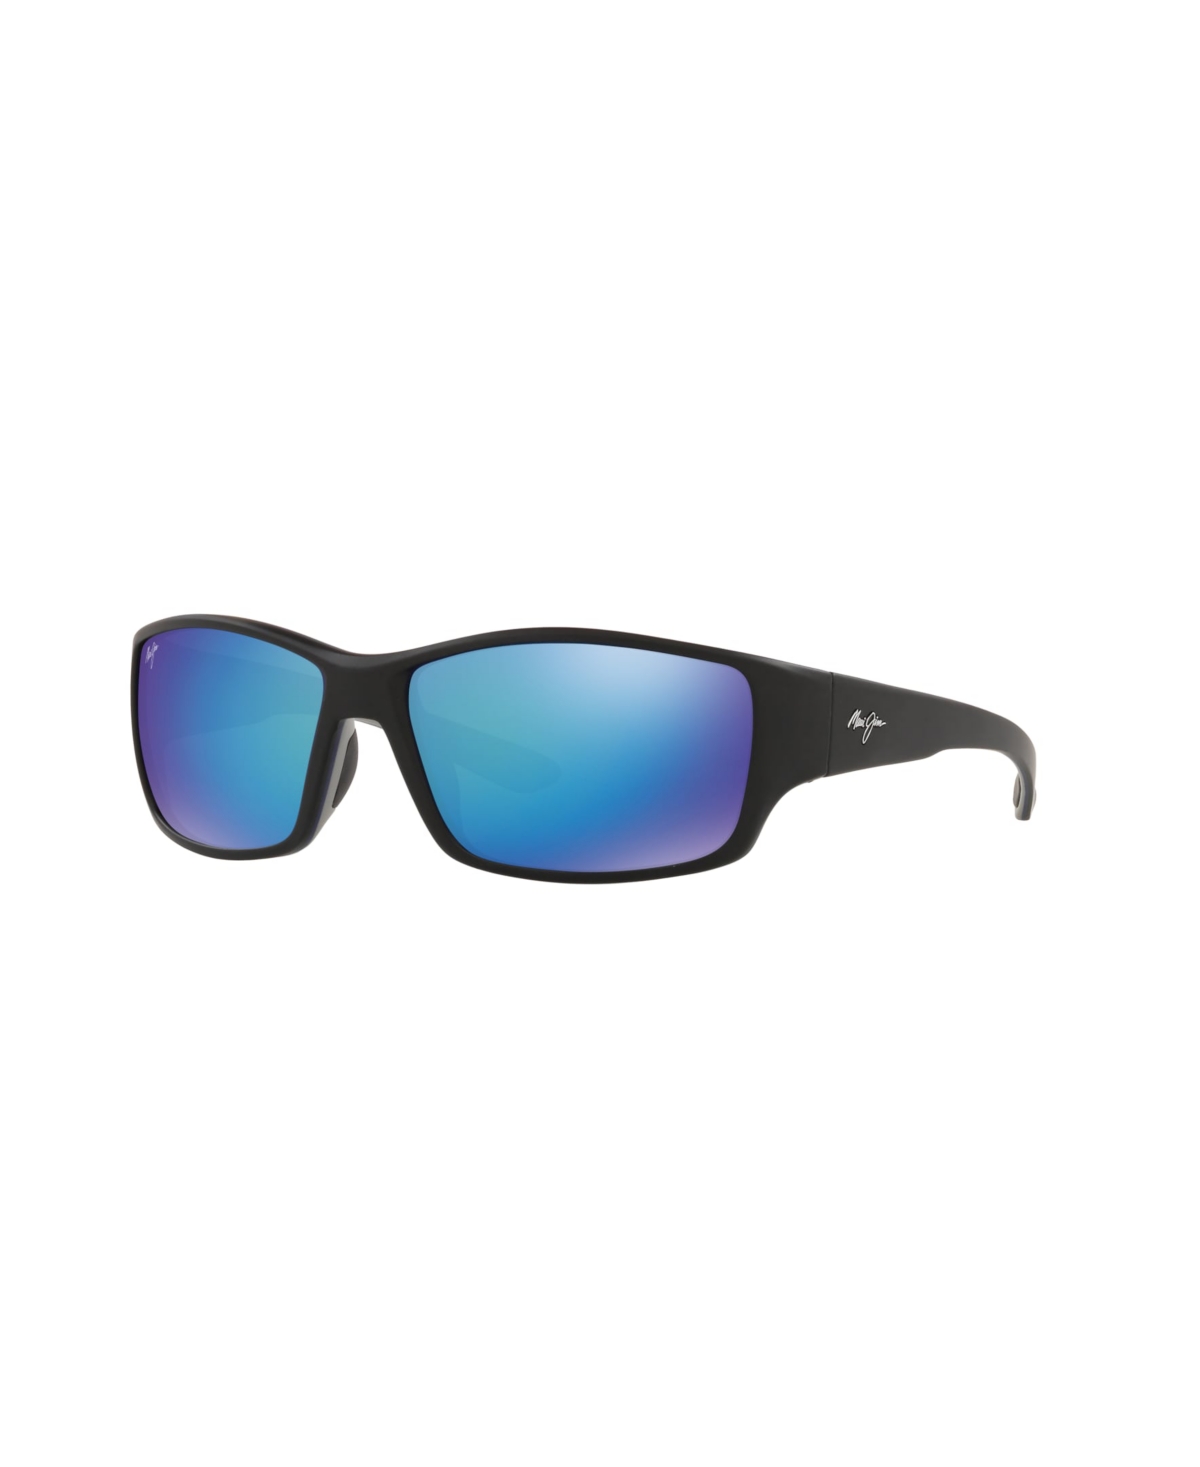 Men's Sunglasses, Local Kine Mj000617 - Black